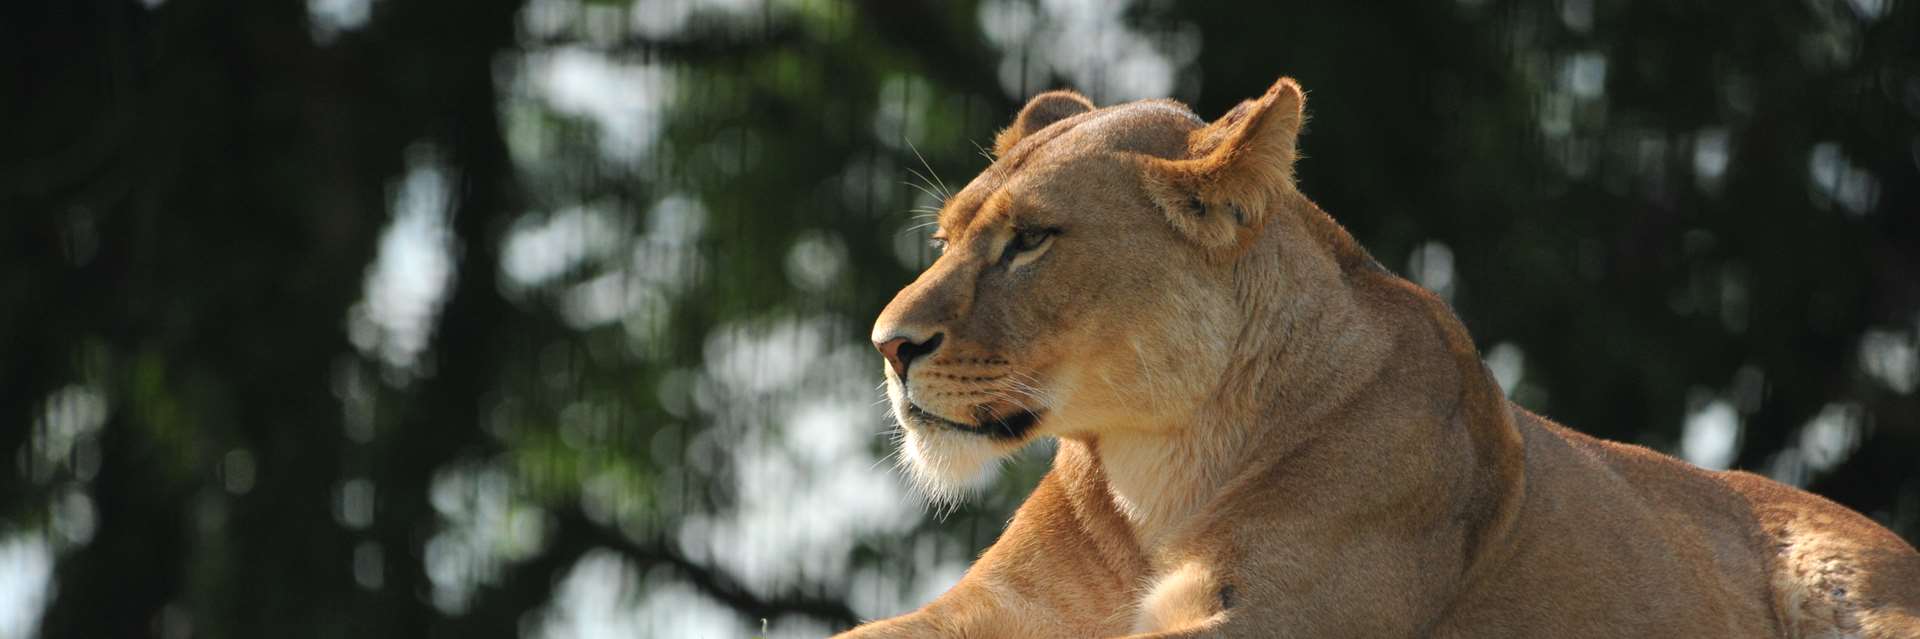 Amazing Facts about Lions  OneKindPlanet Animal Education & Facts